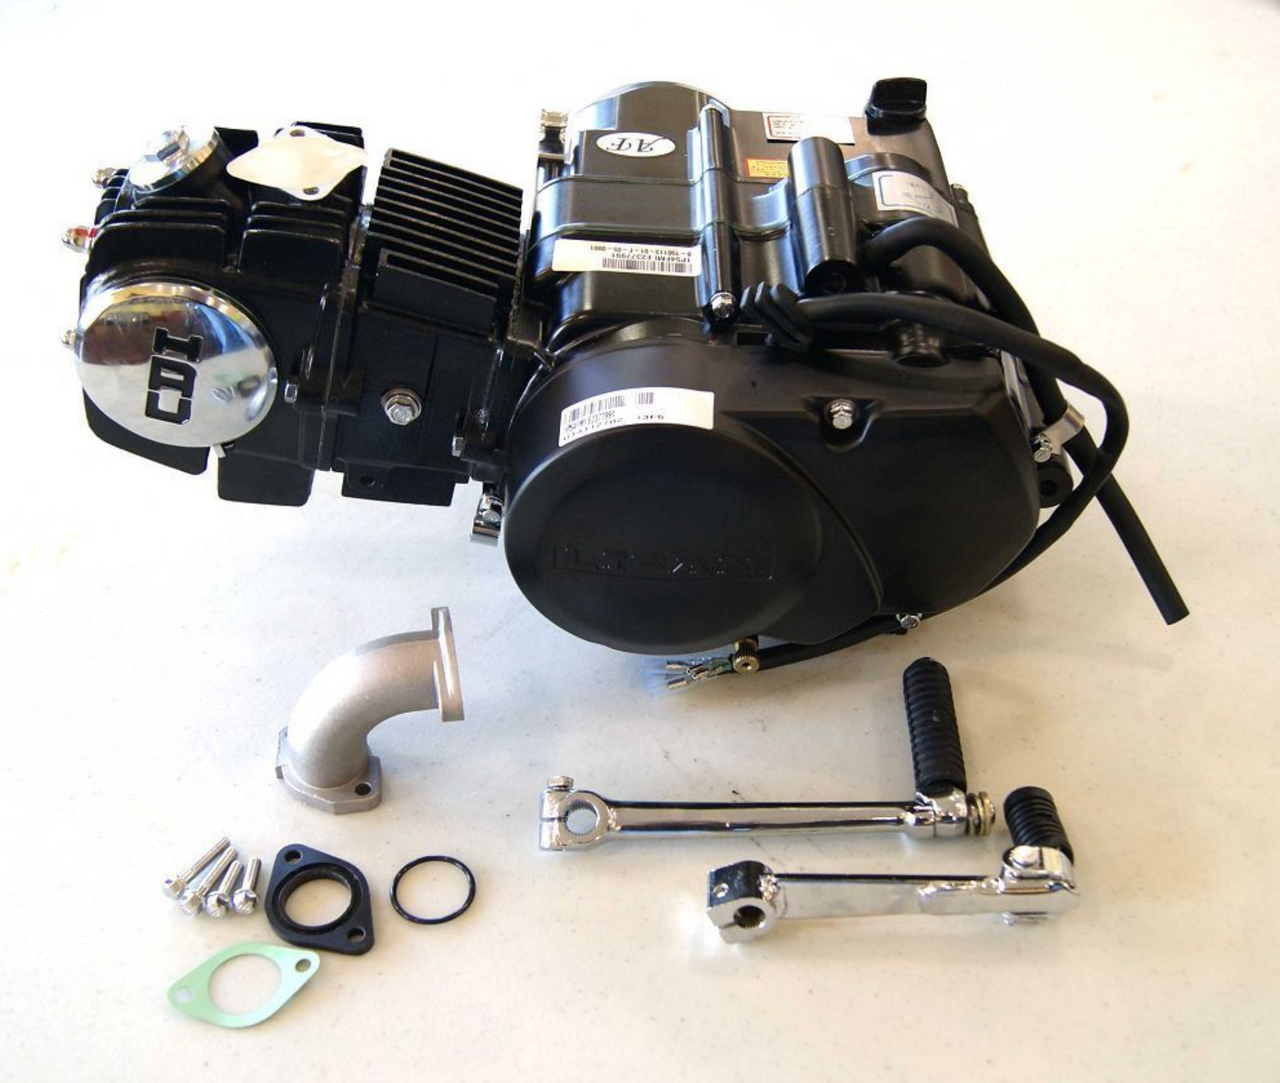 Lifan 125cc Semi Auto Engine/Manual Engine